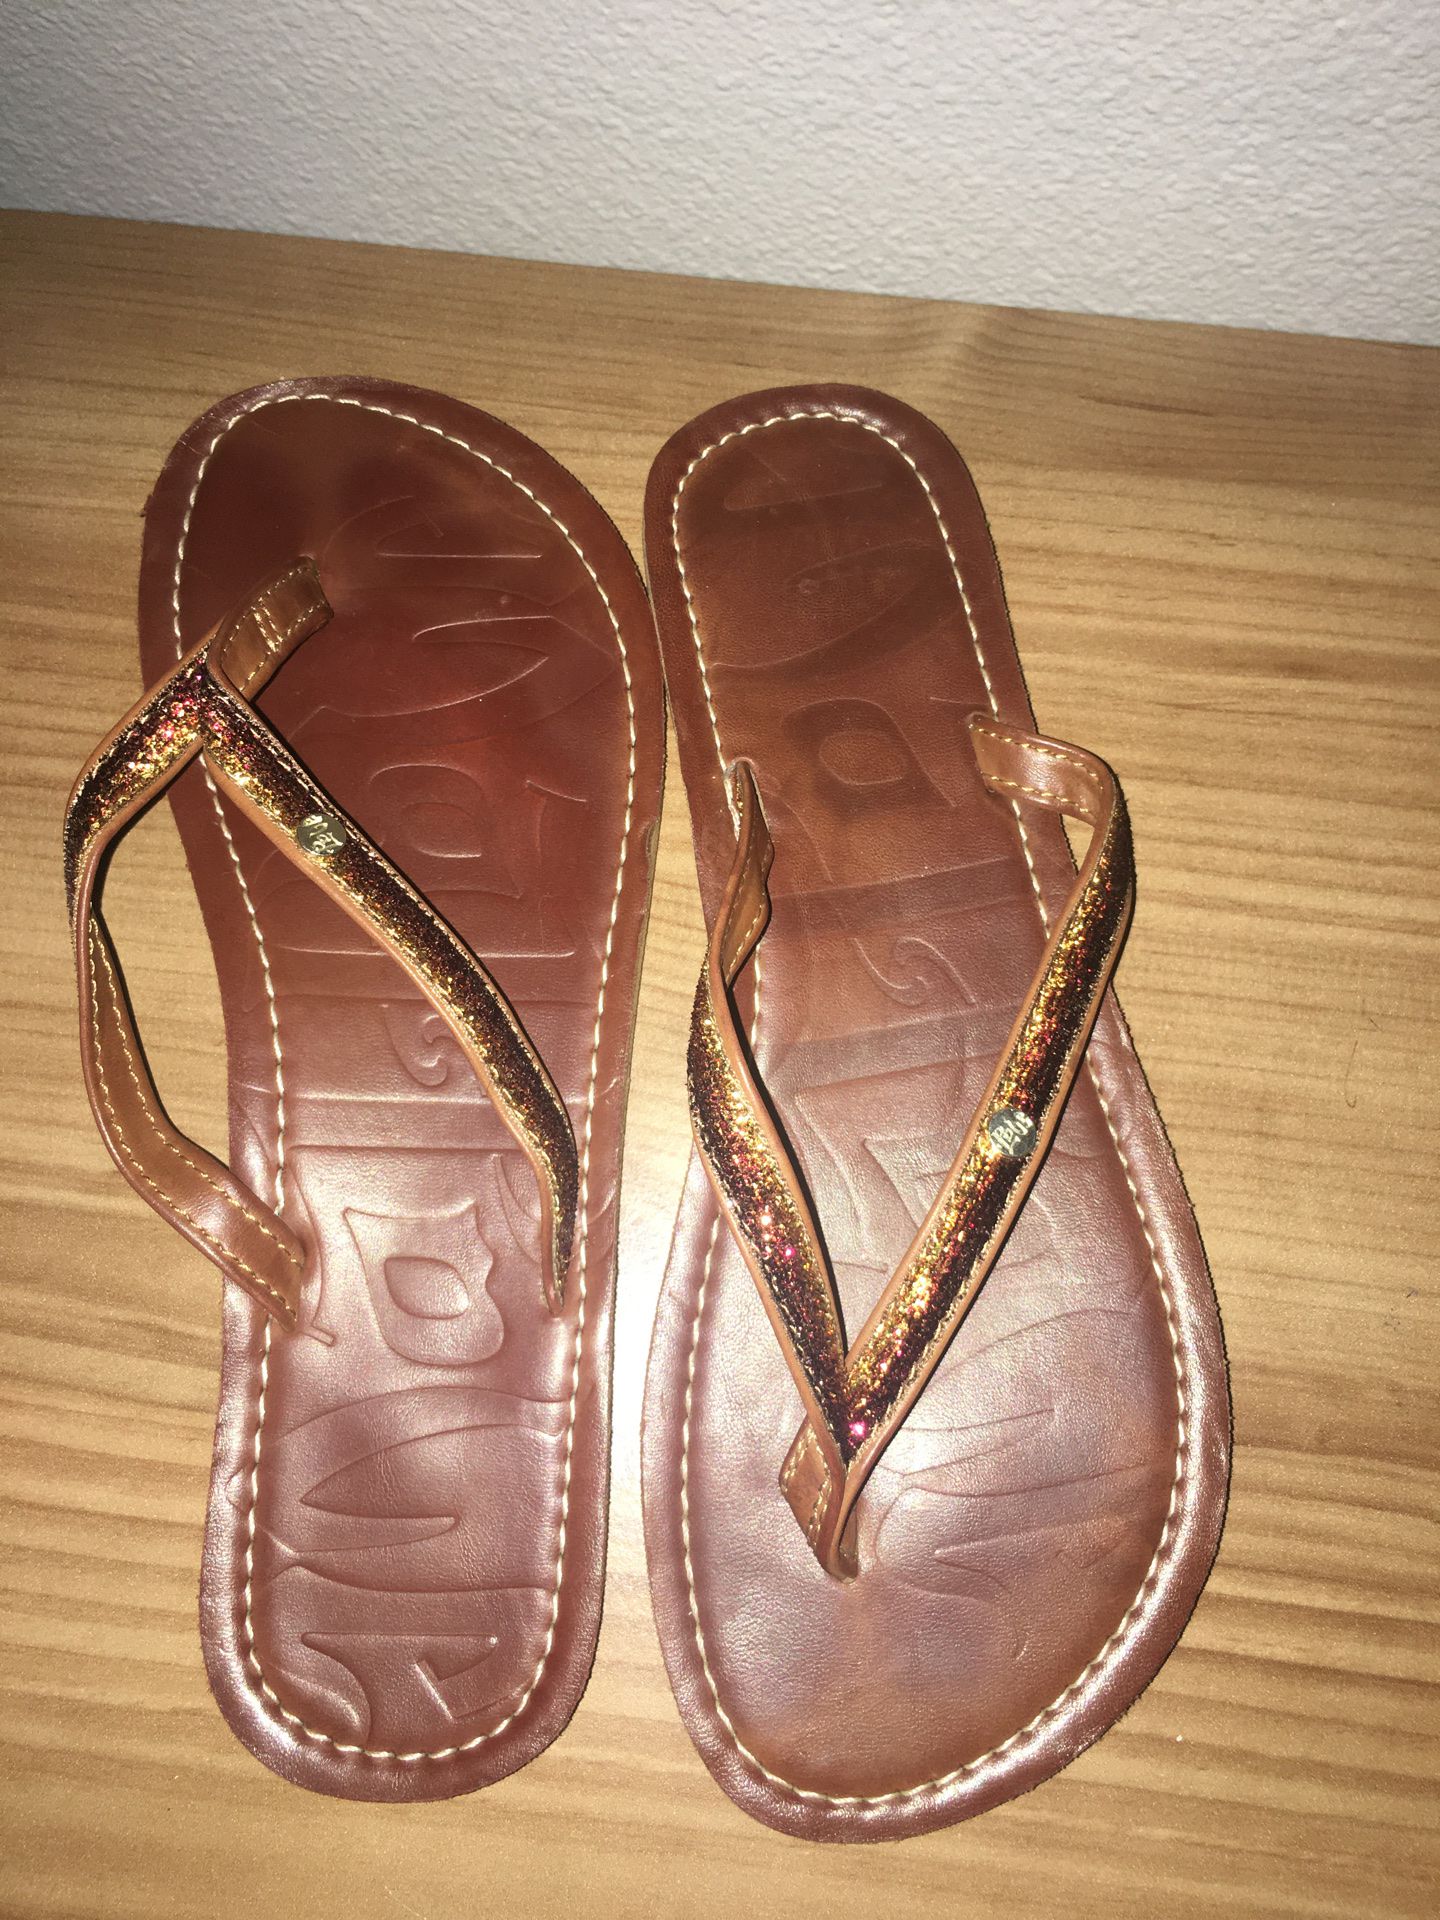 New Women sandals size 7